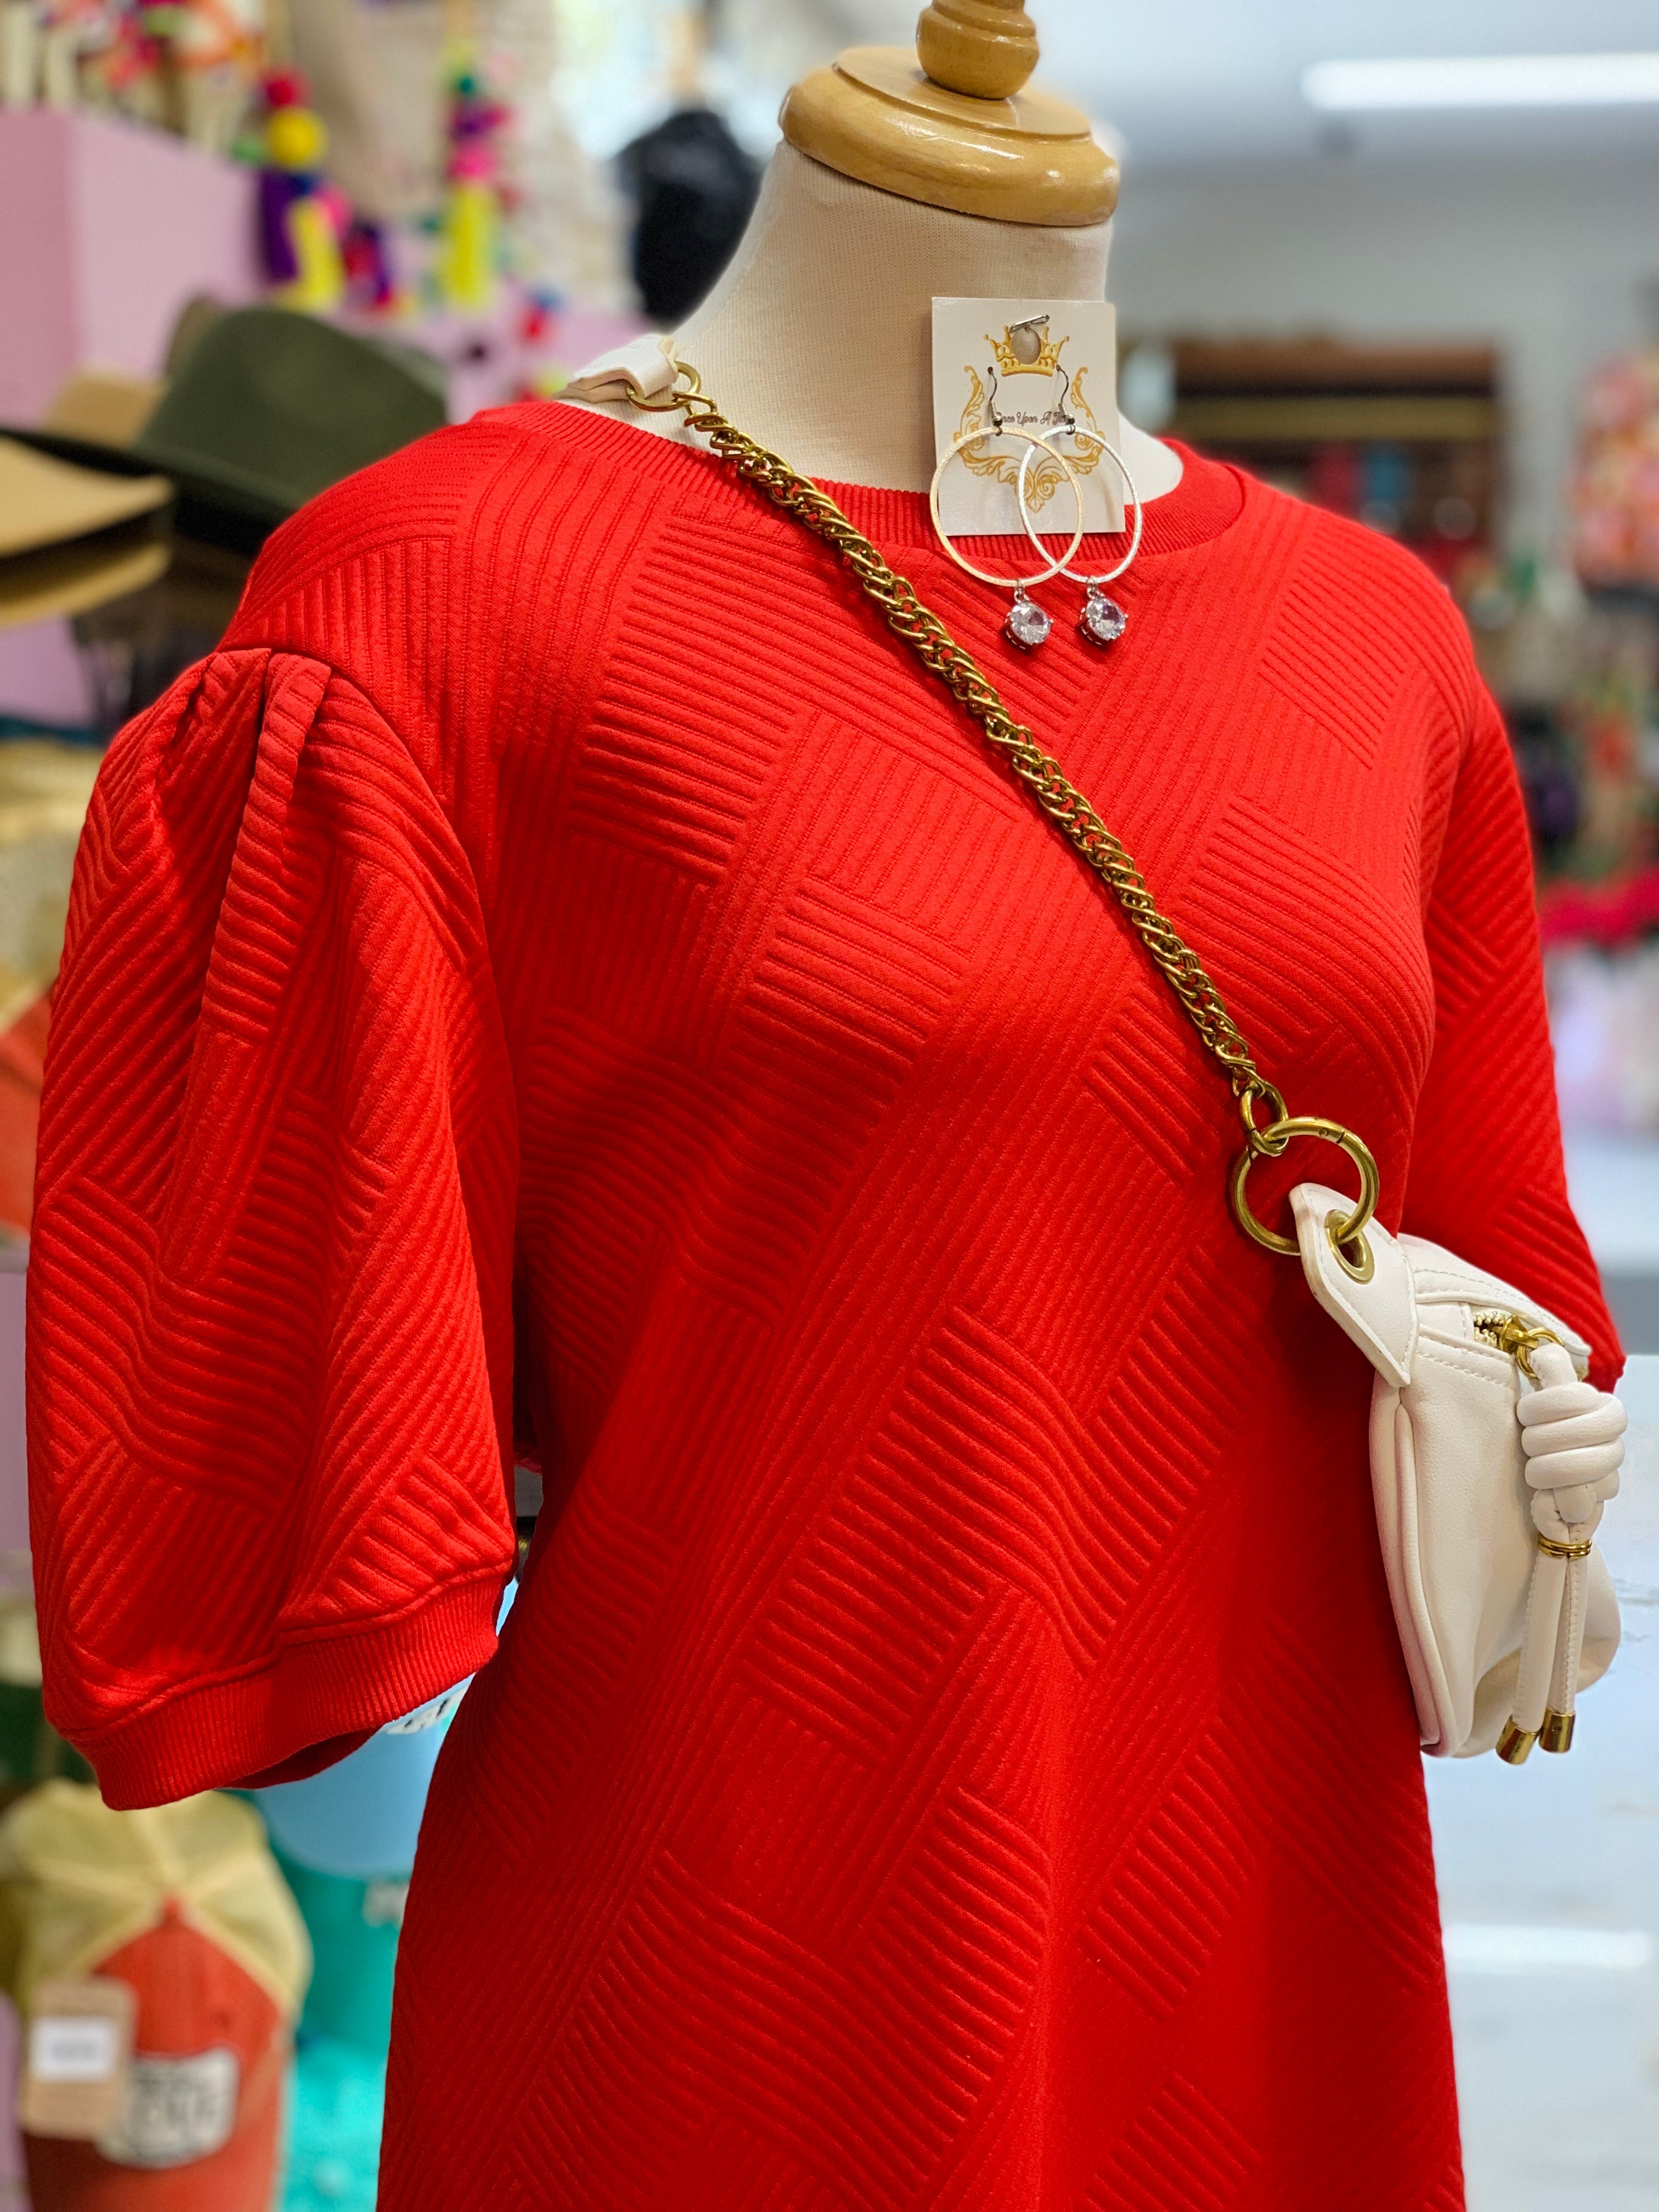 Curvy Women's Poet Red Dress